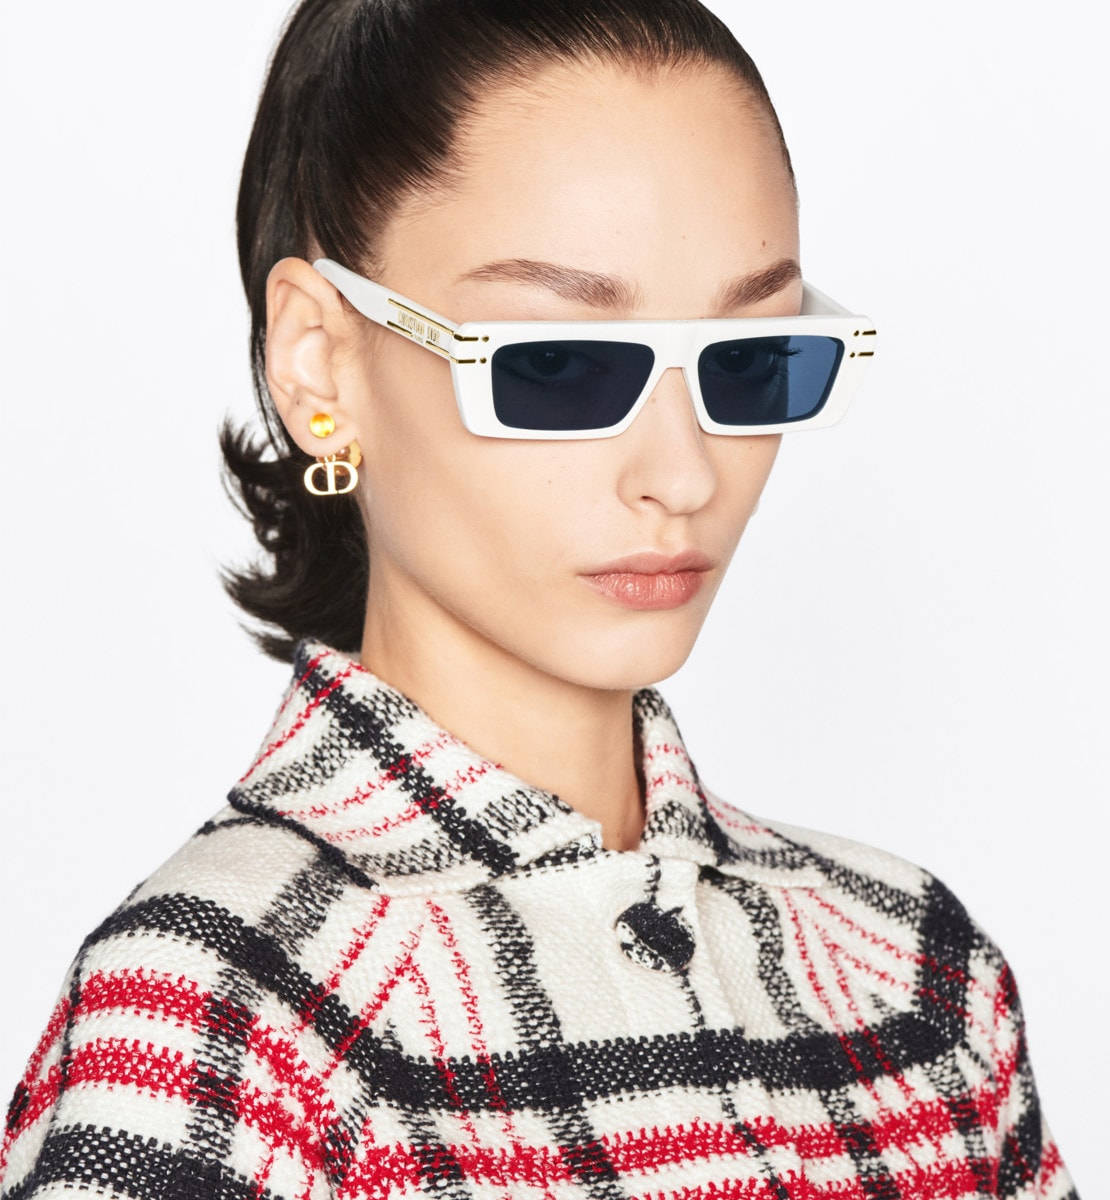 White Rectangular Sunglasses By Christian Dior Wallpaper